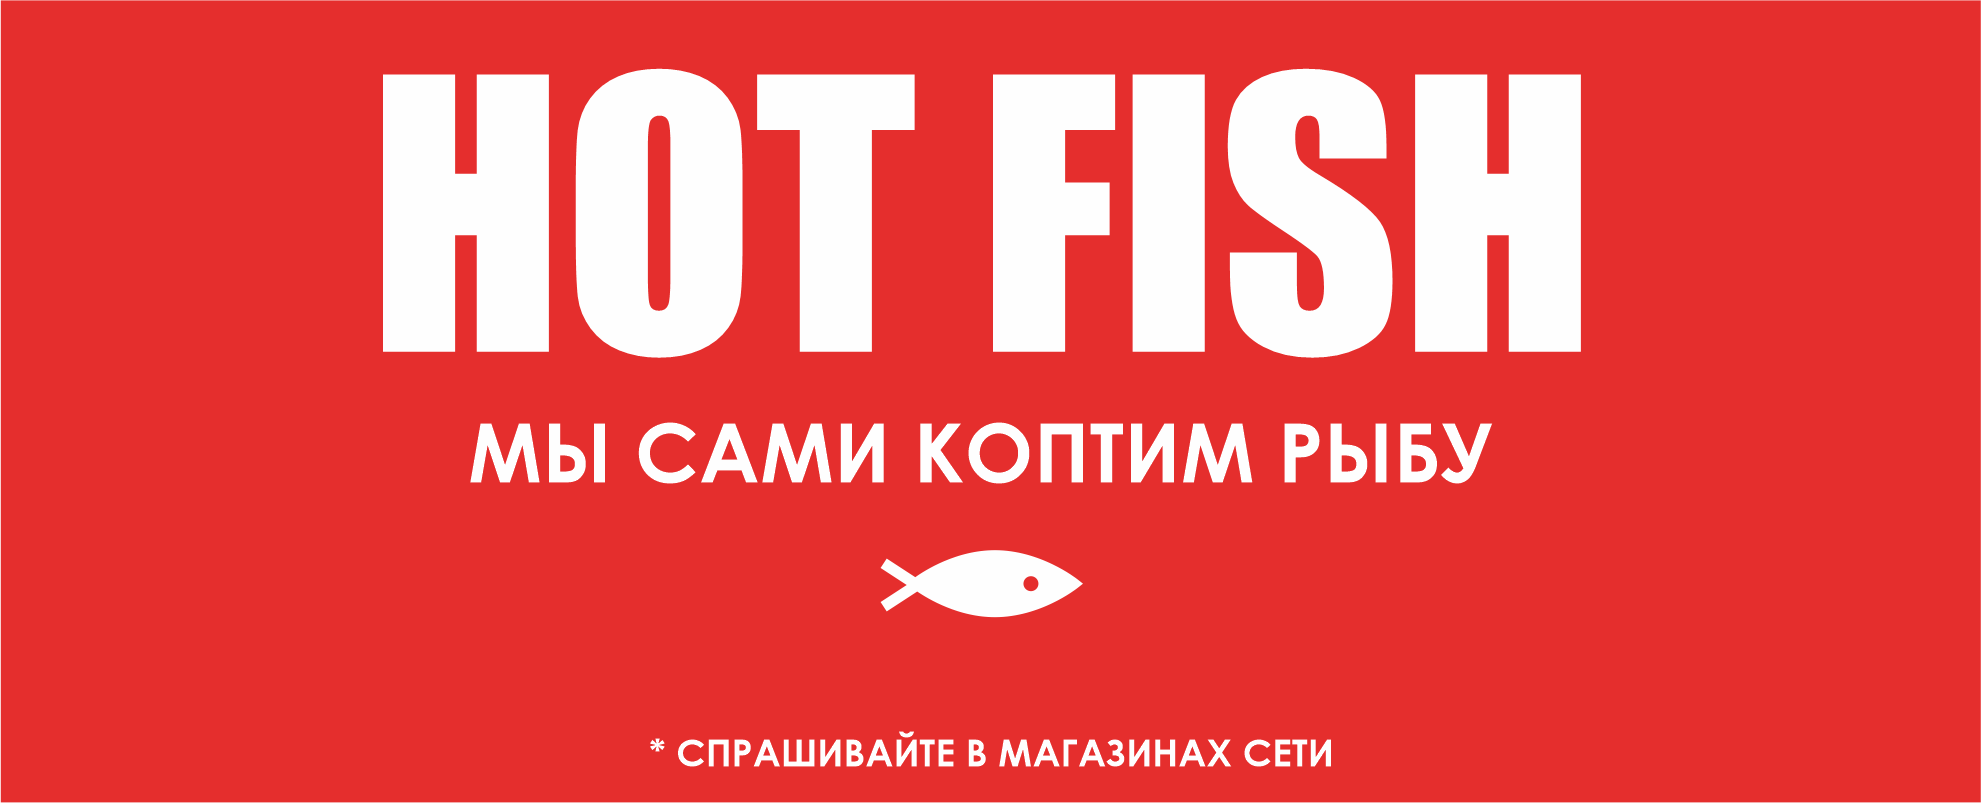 HOT FISH